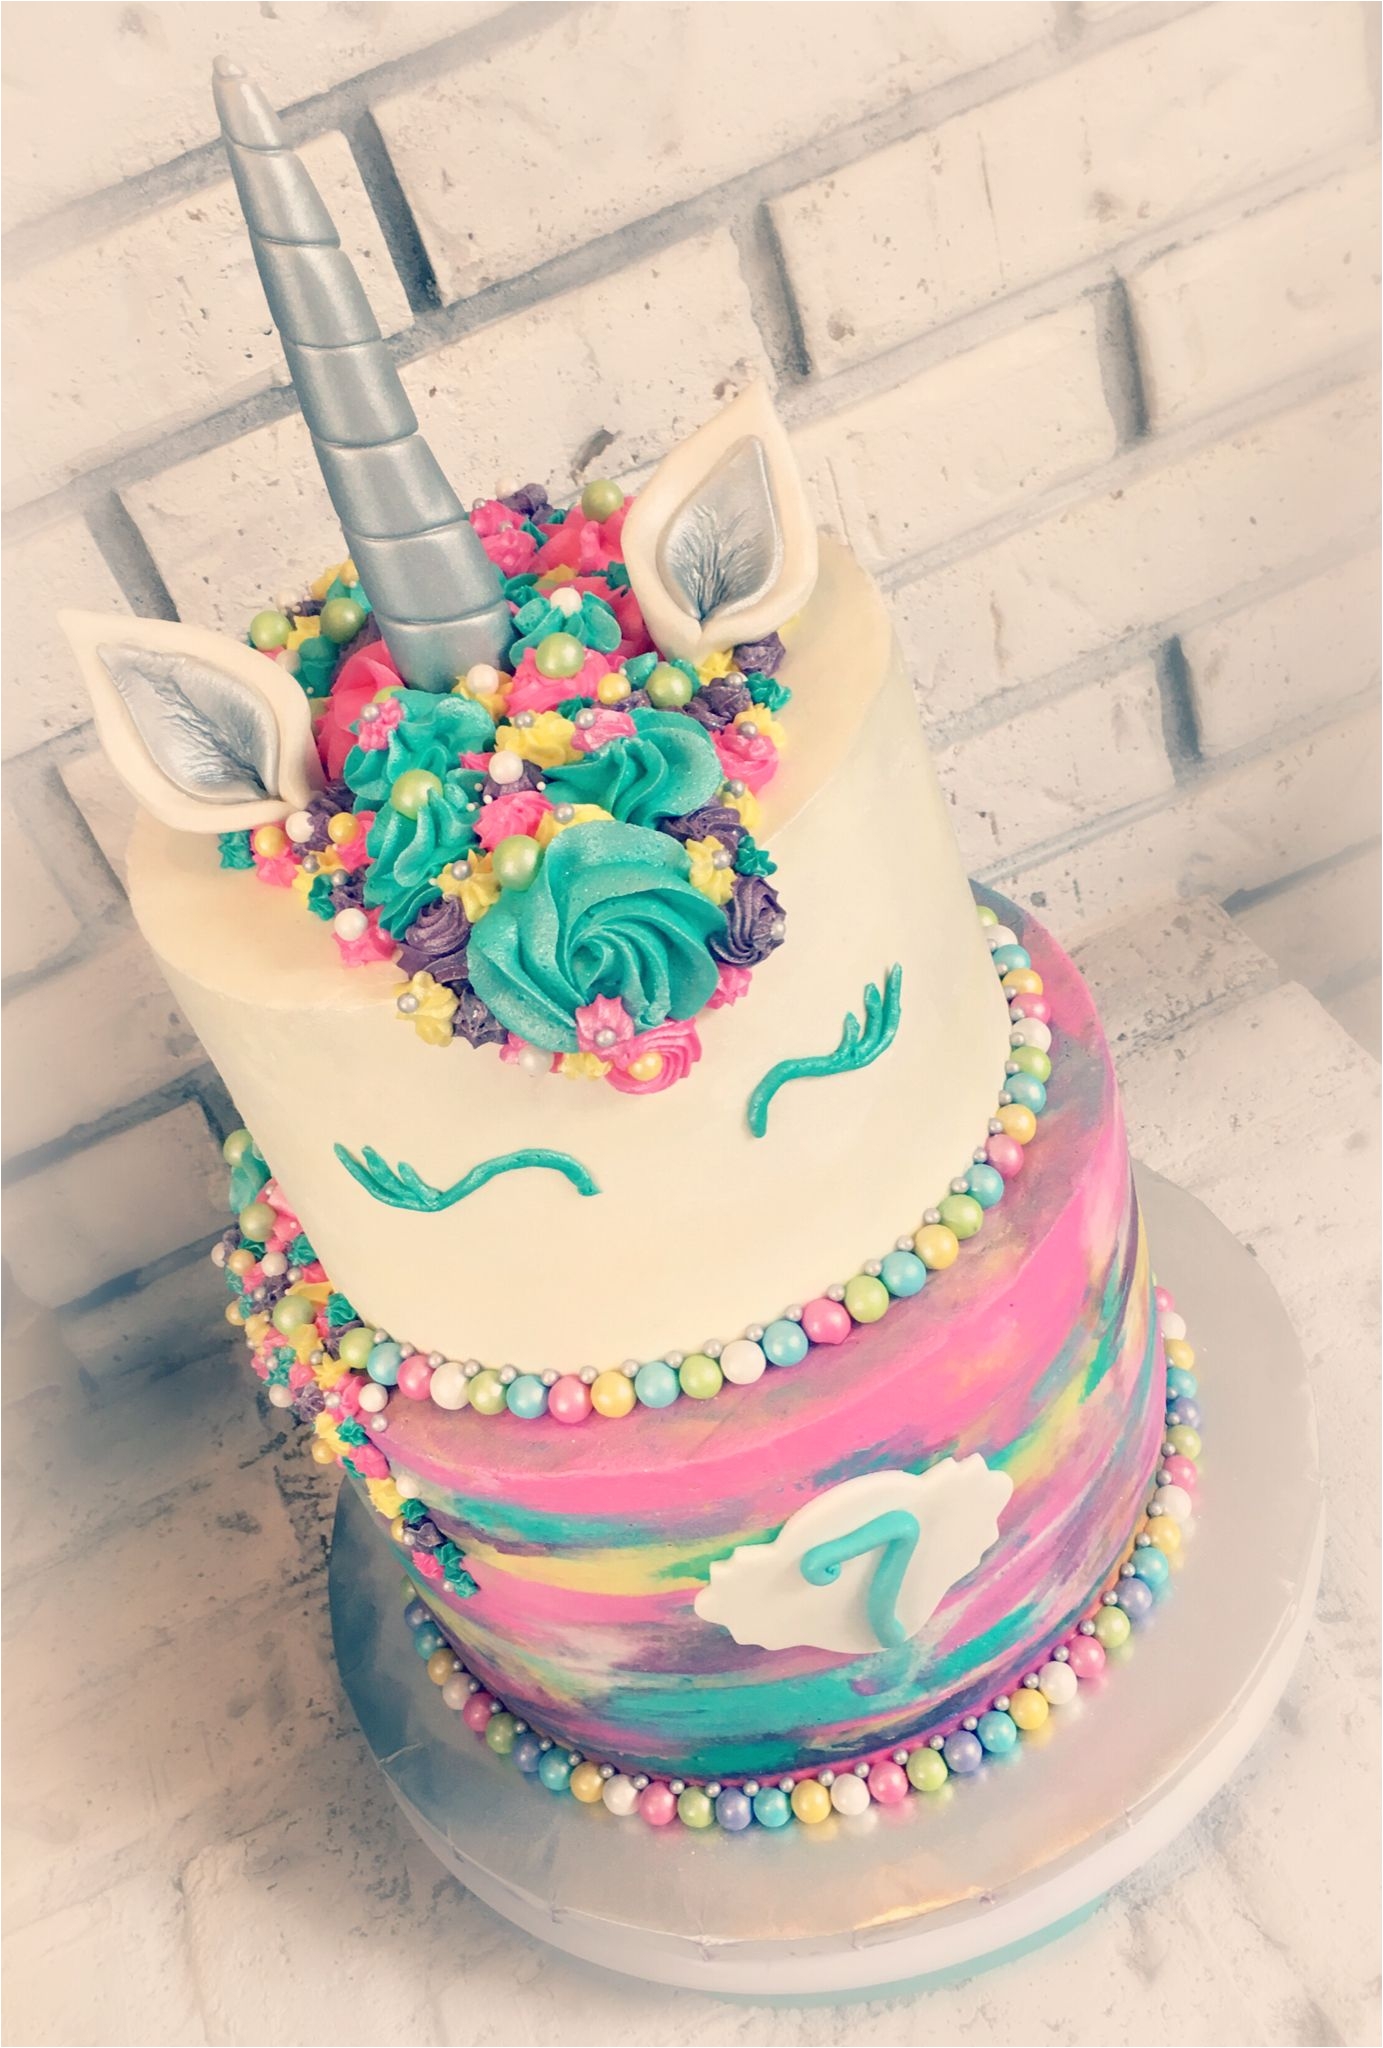 Best Cake Decorating Classes Near Me Unicorn Rainbow buttercream Tiered Cake Unicorn Stuff Pinterest